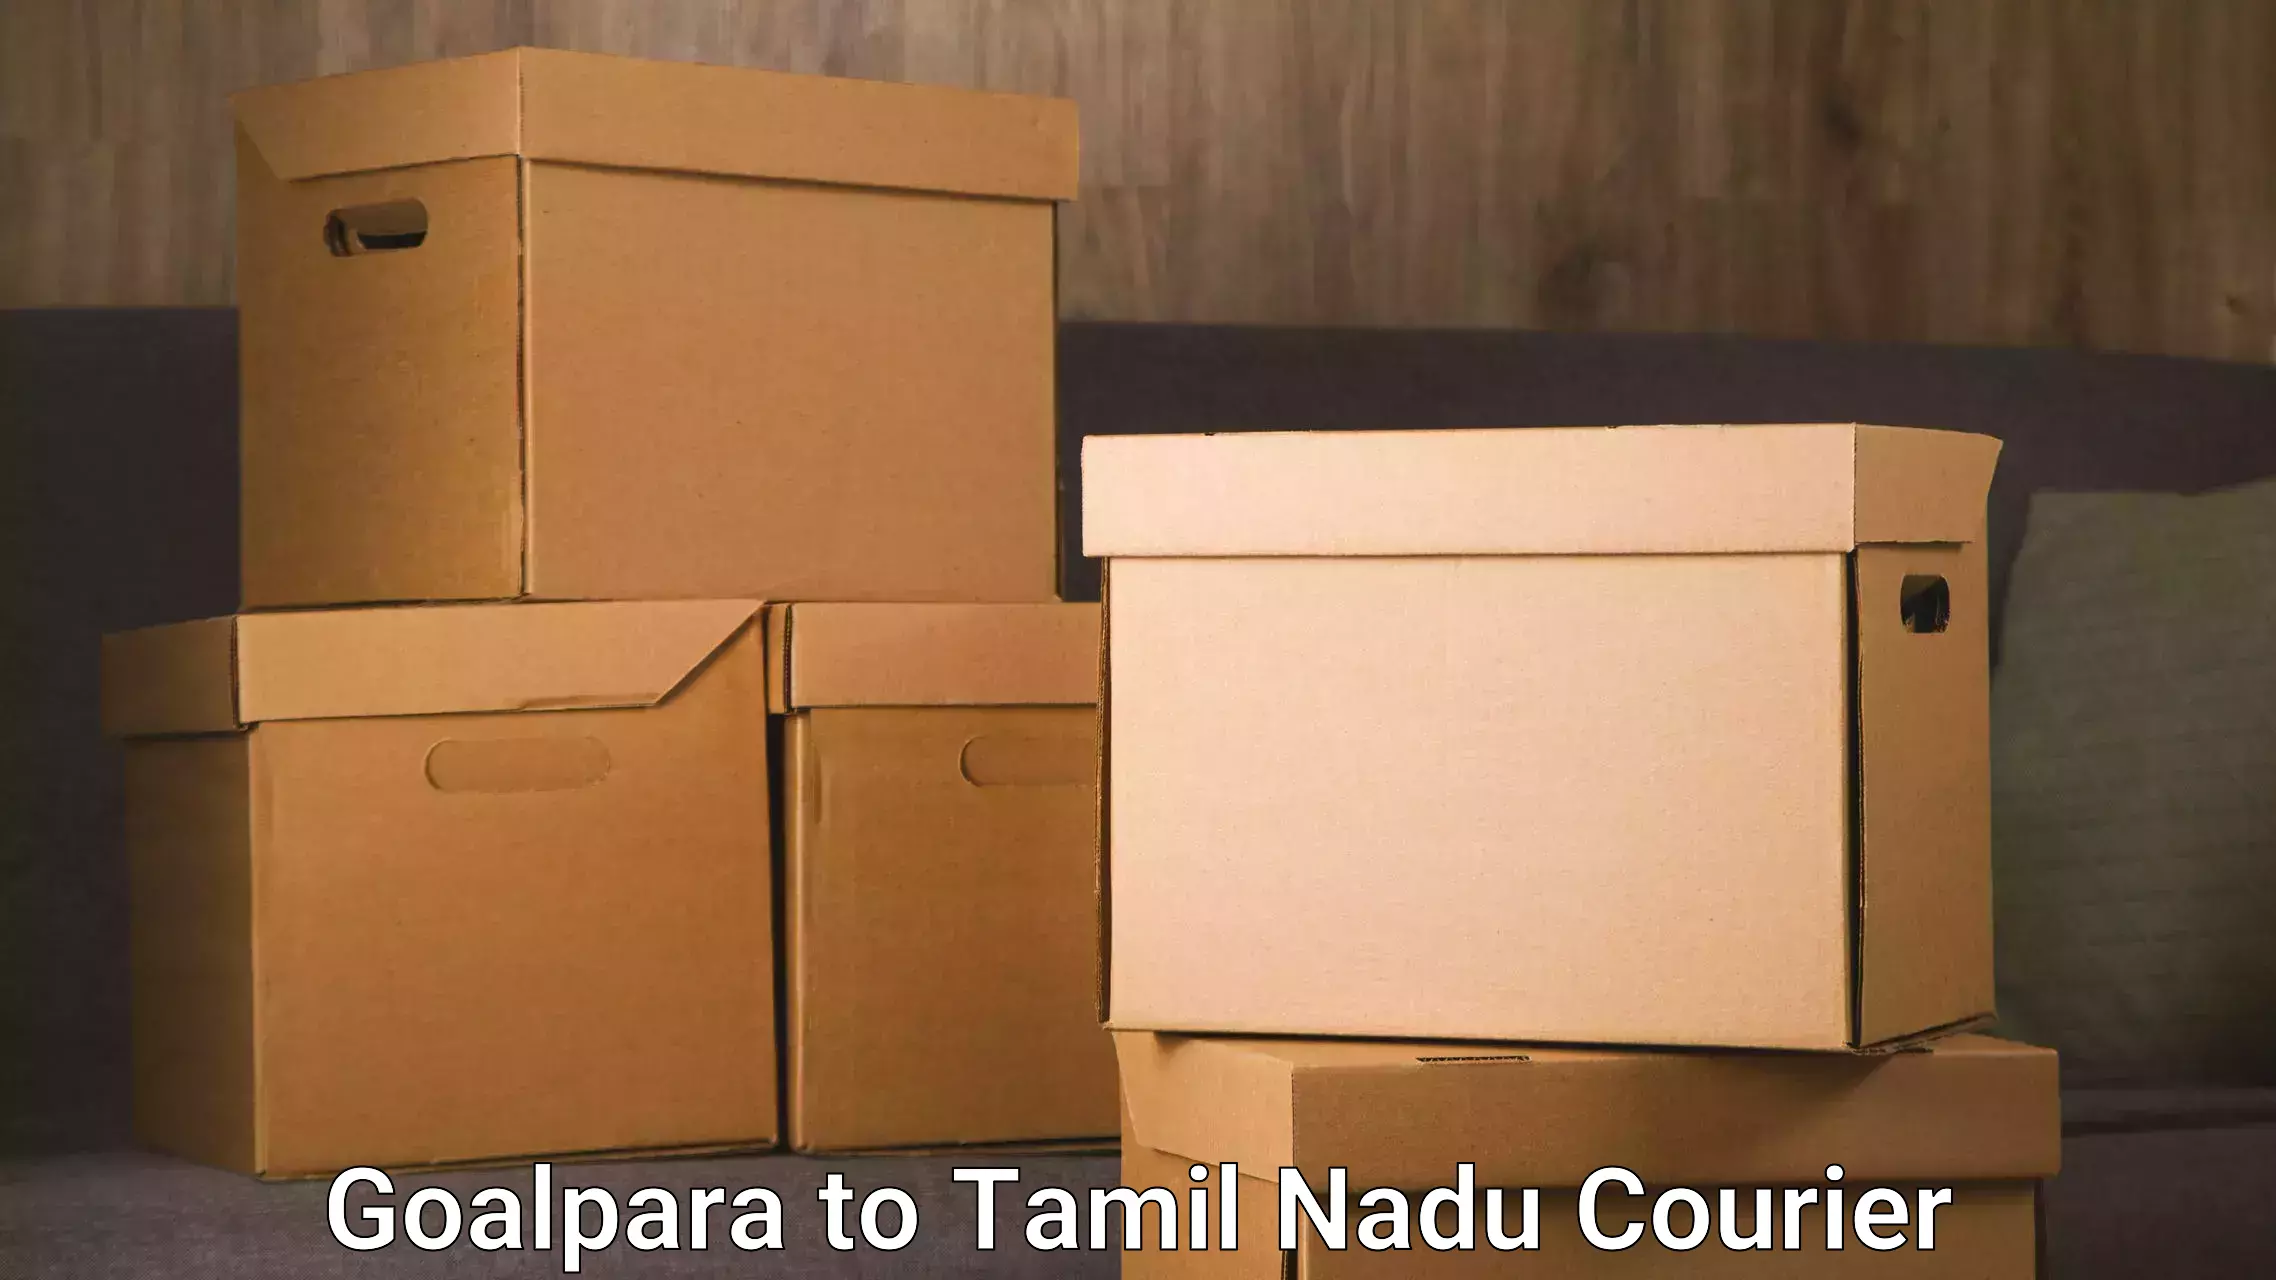 Reliable delivery network Goalpara to Tirunelveli